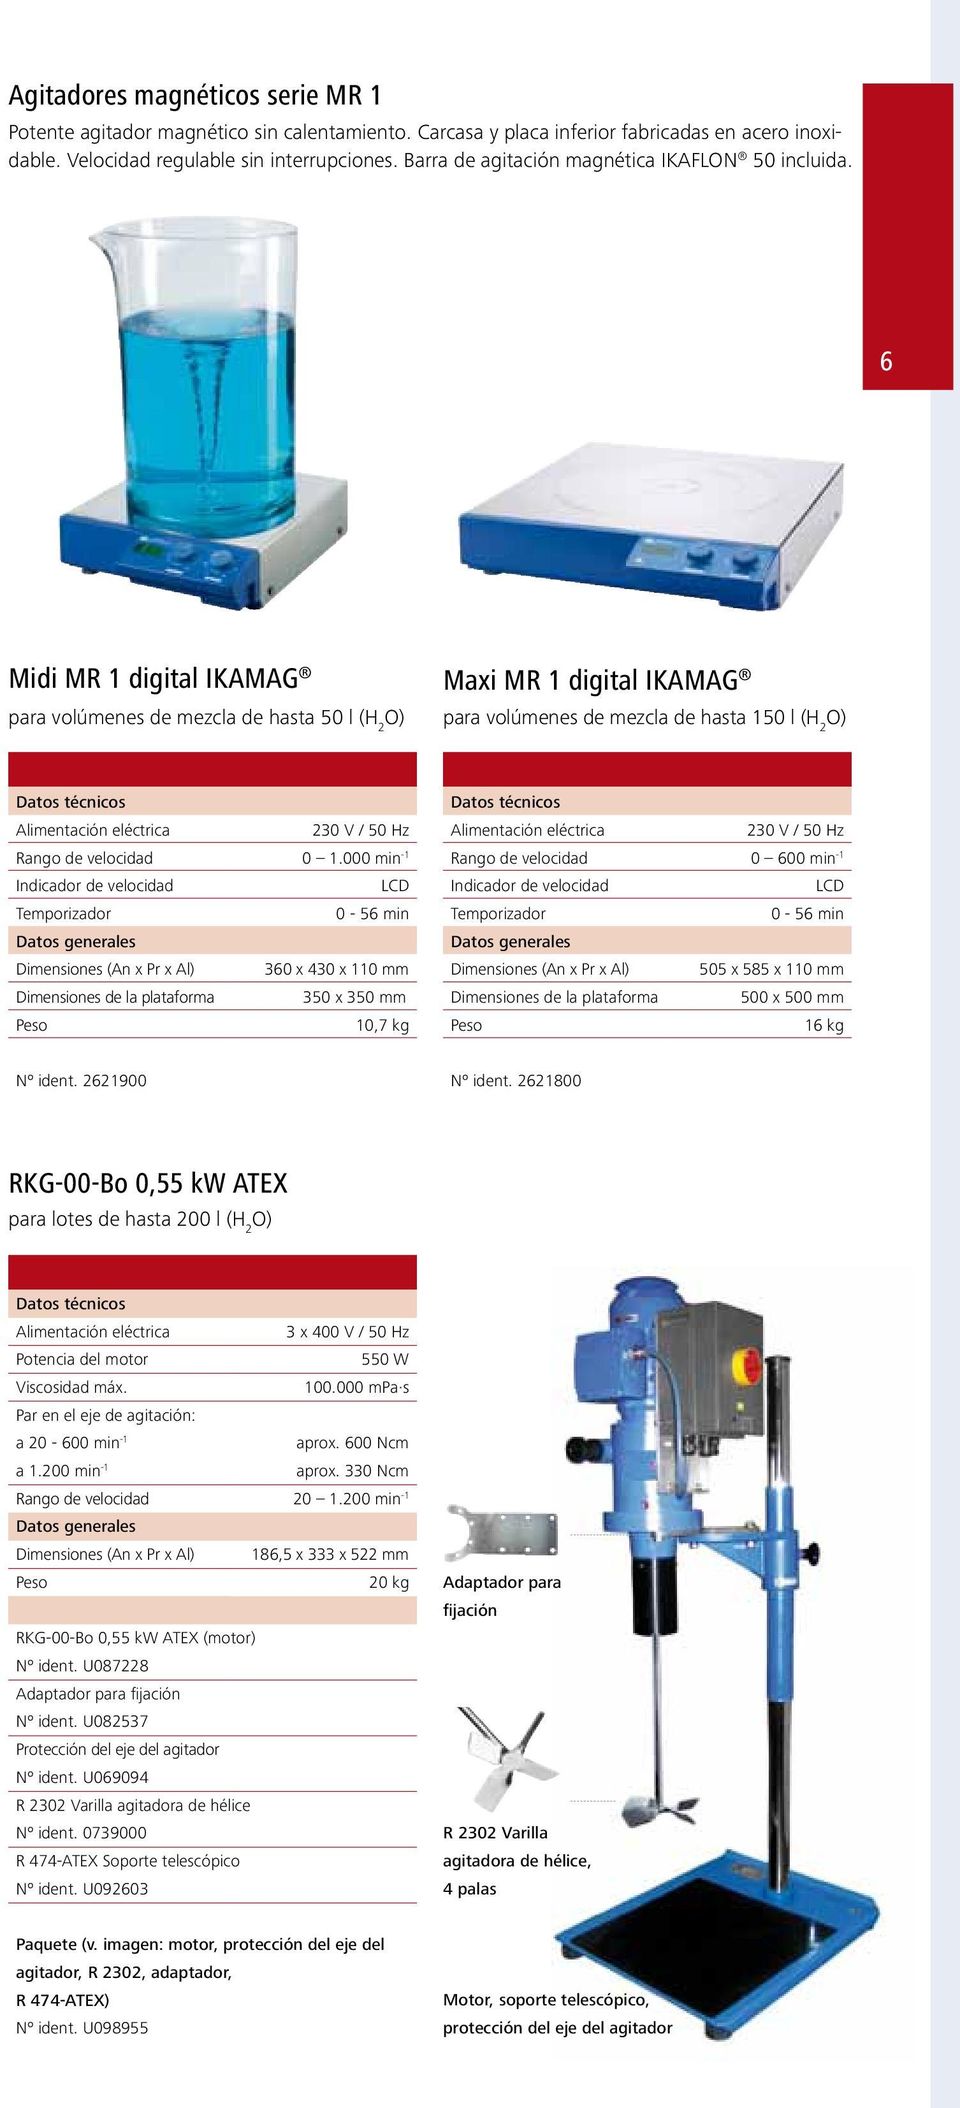 6 Midi MR 1 digital IKAMAG para volúmenes de mezcla de hasta 50 l (H 2 Maxi MR 1 digital IKAMAG para volúmenes de mezcla de hasta 150 l (H 2 230 V / 50 Hz Rango de velocidad 0 1.